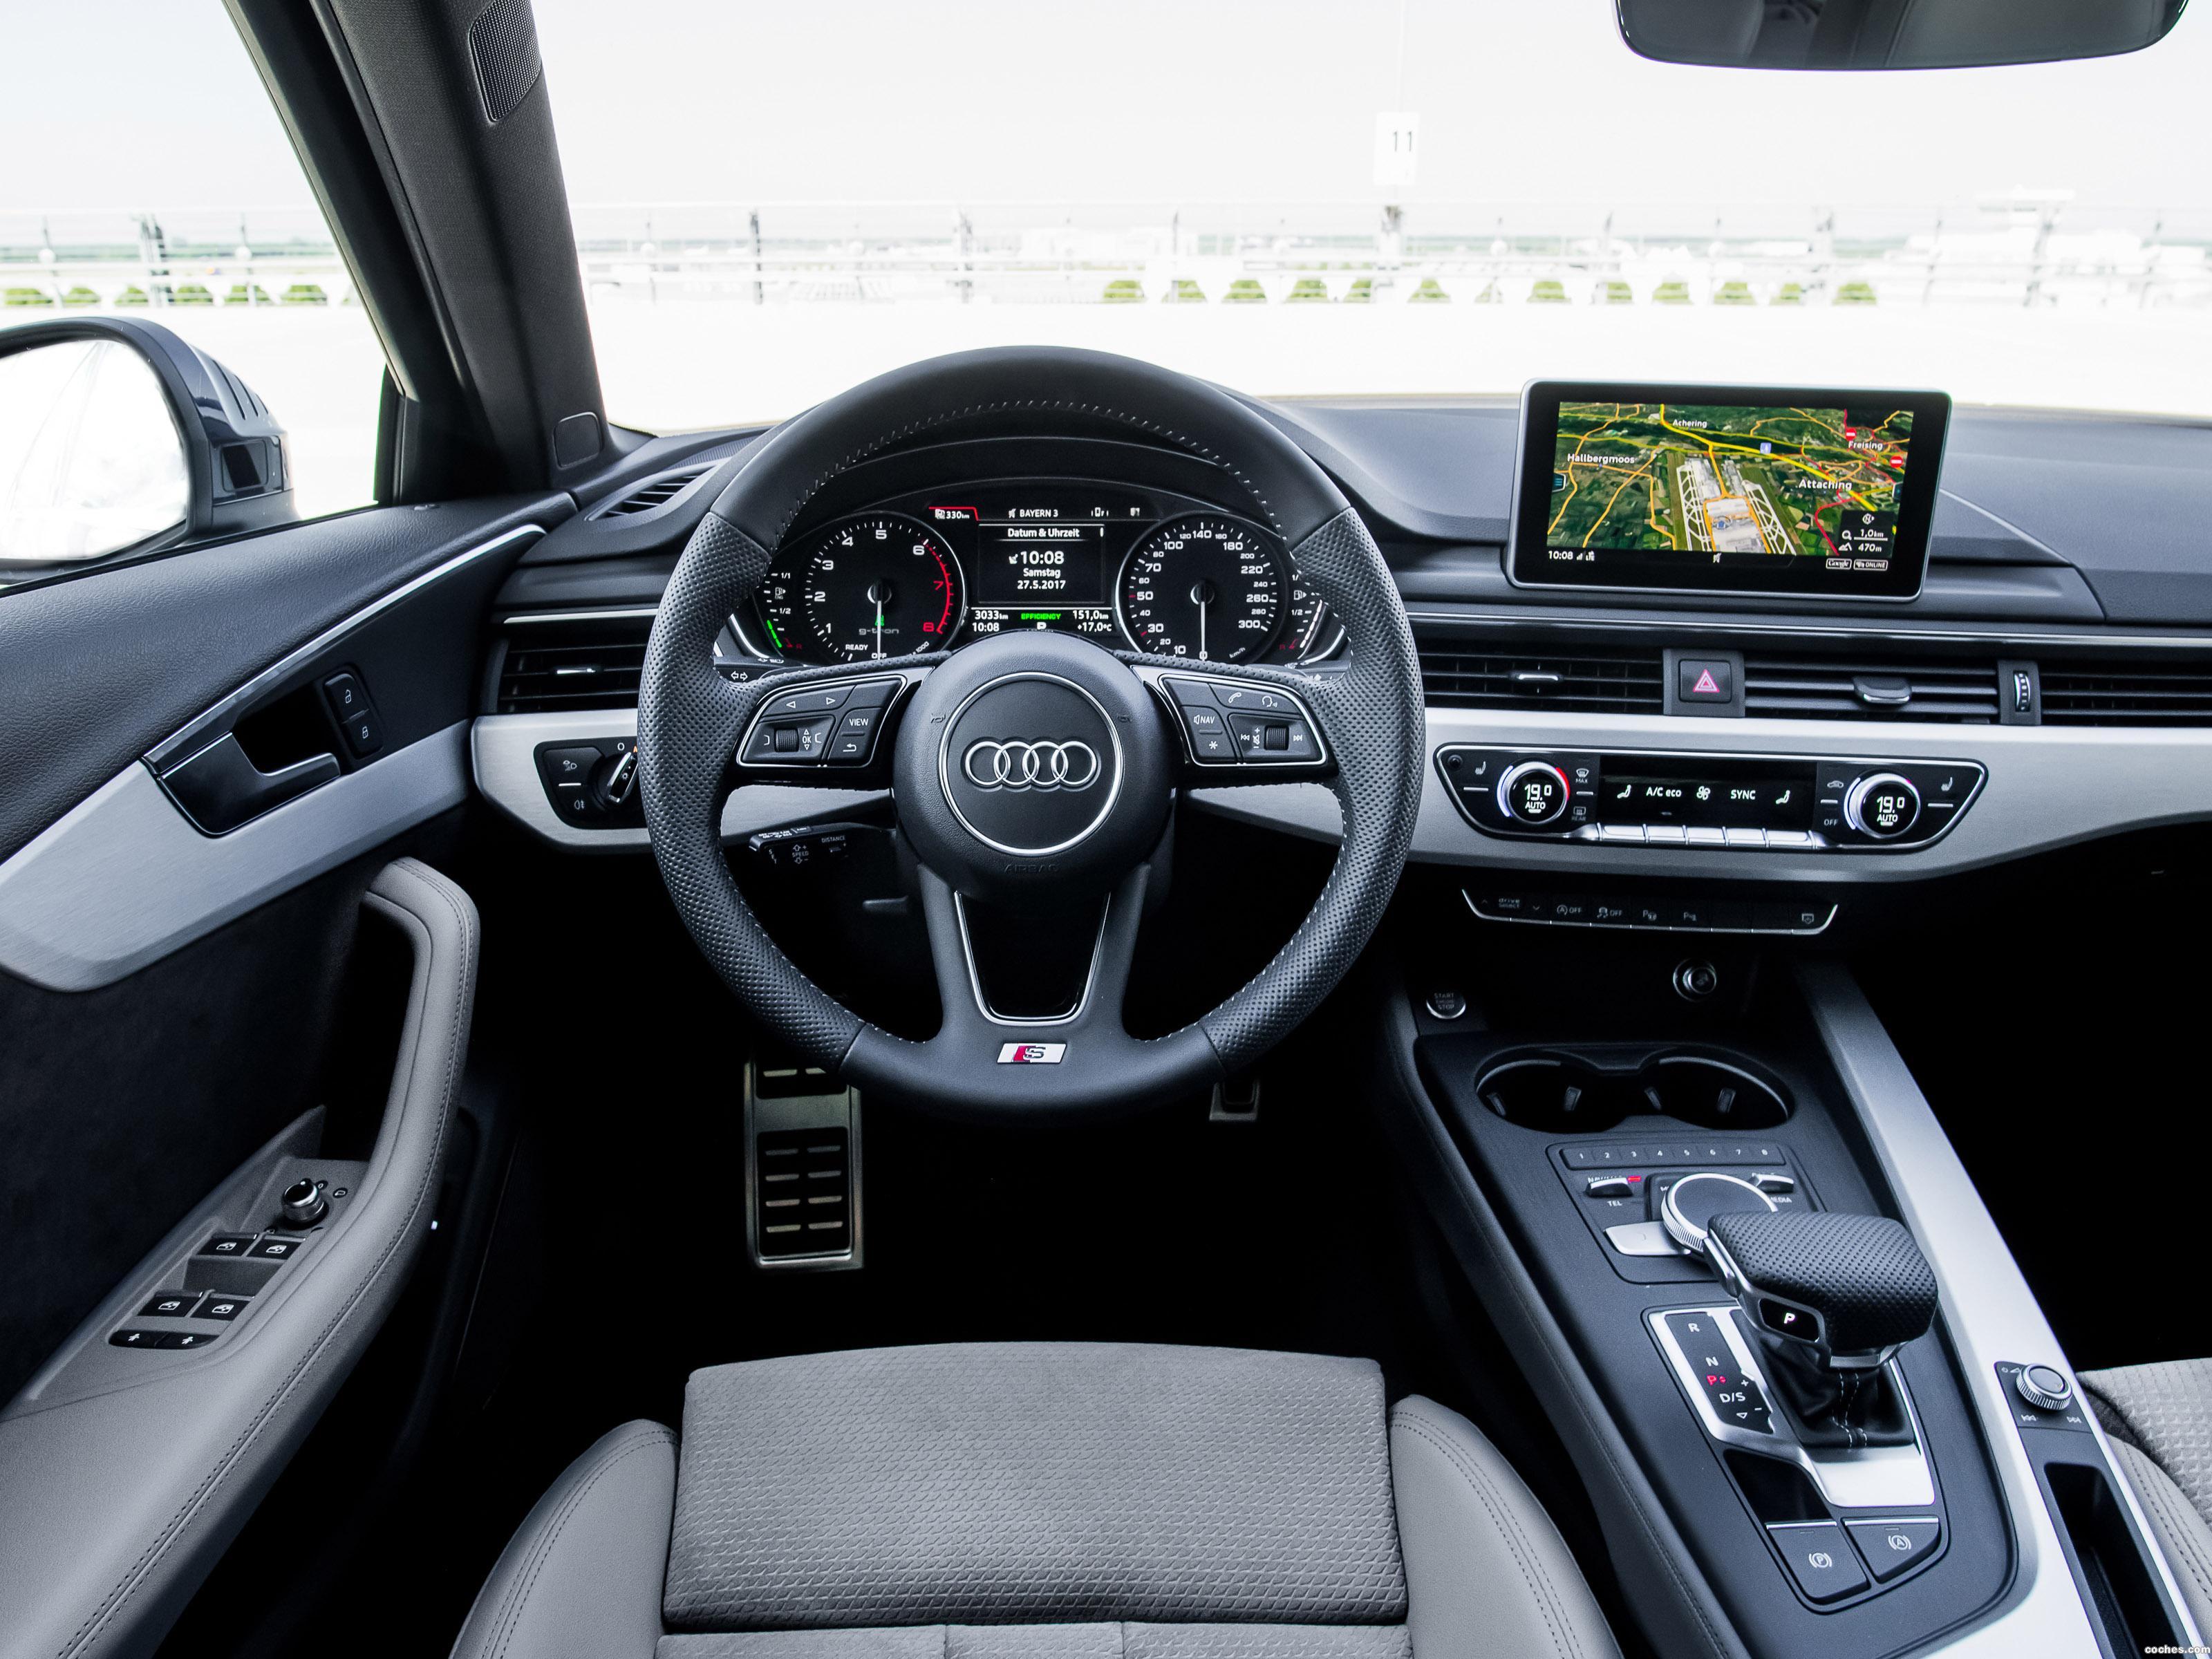 Audi A4 Avant g-tron exterior specifications